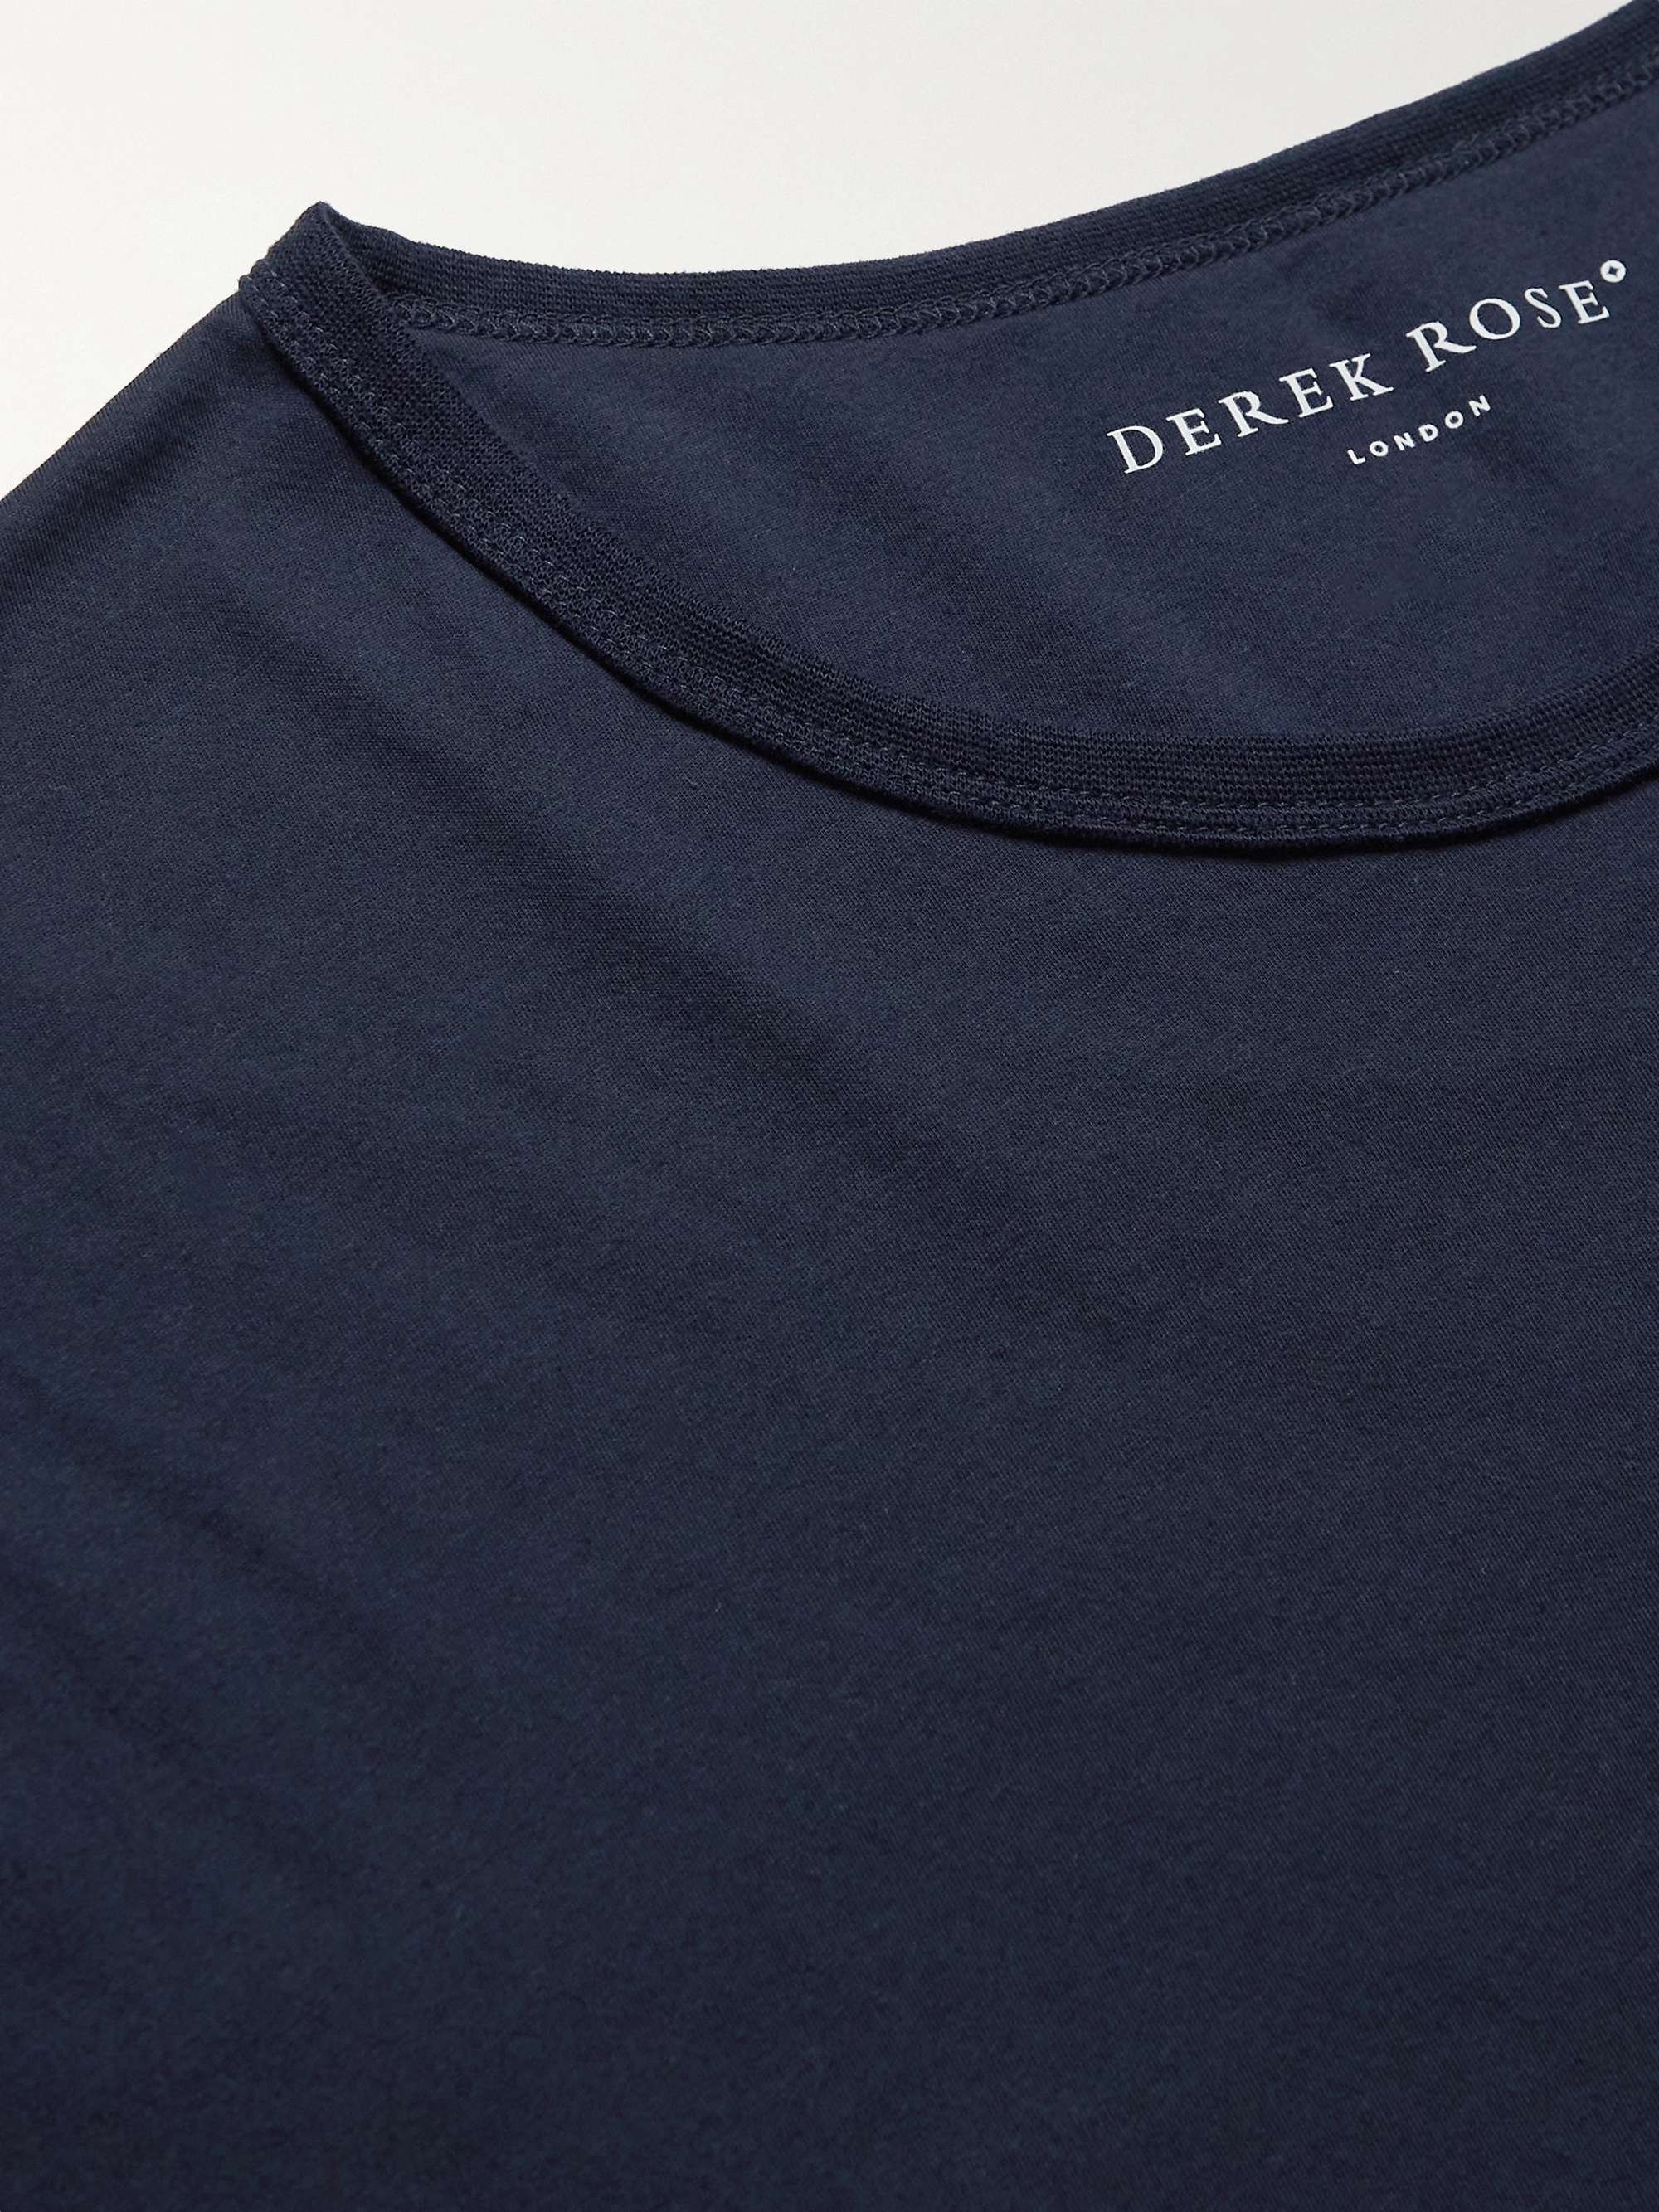 DEREK ROSE Riley 1 Pima Cotton-Jersey T-Shirt